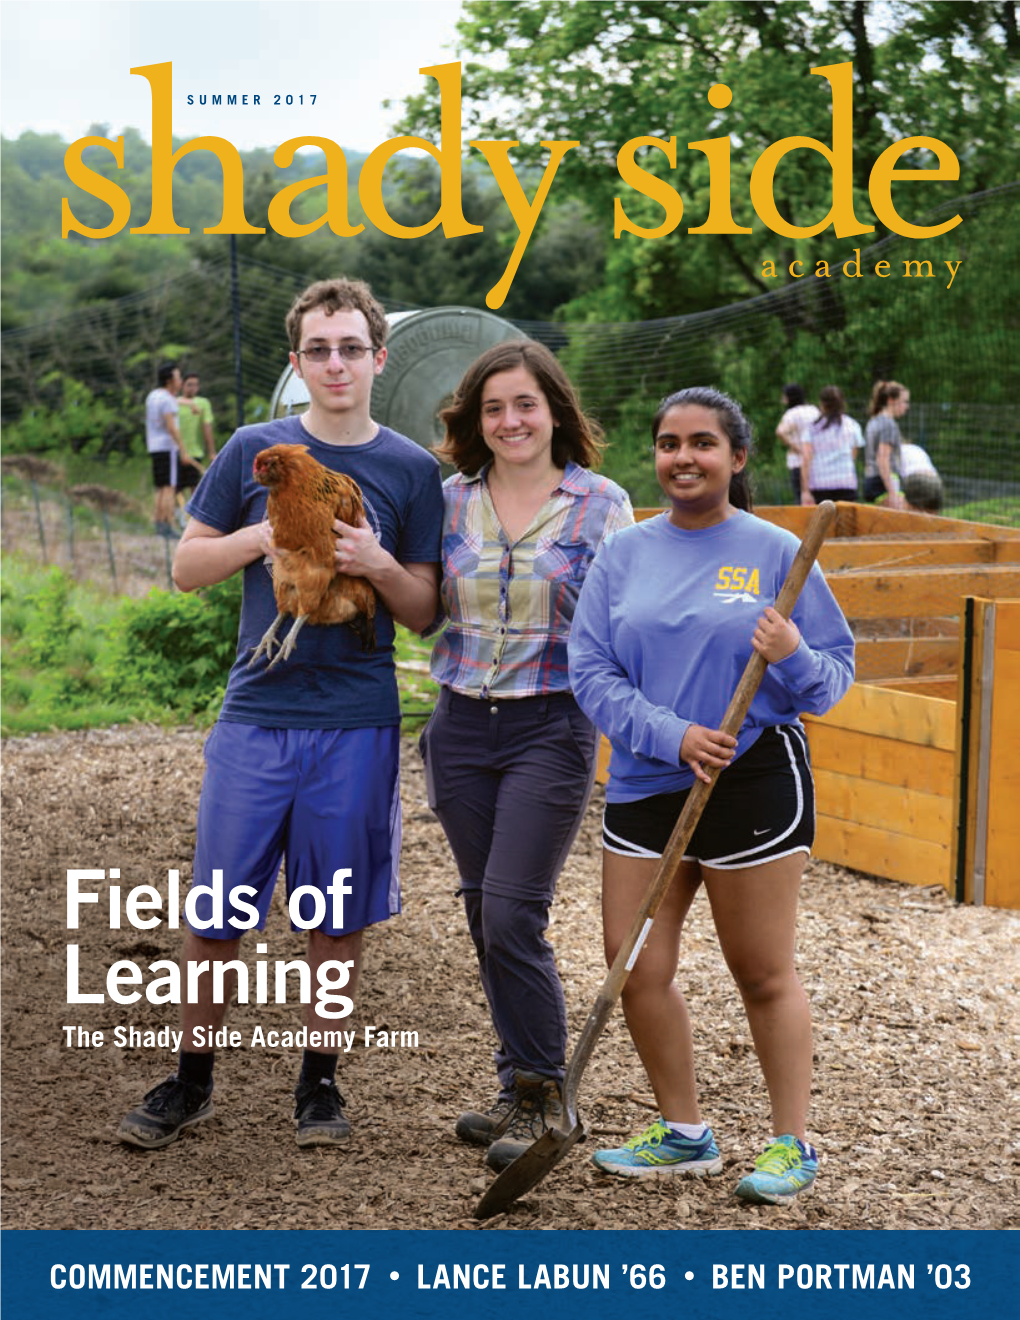 Fields of Learning the Shady Side Academy Farm